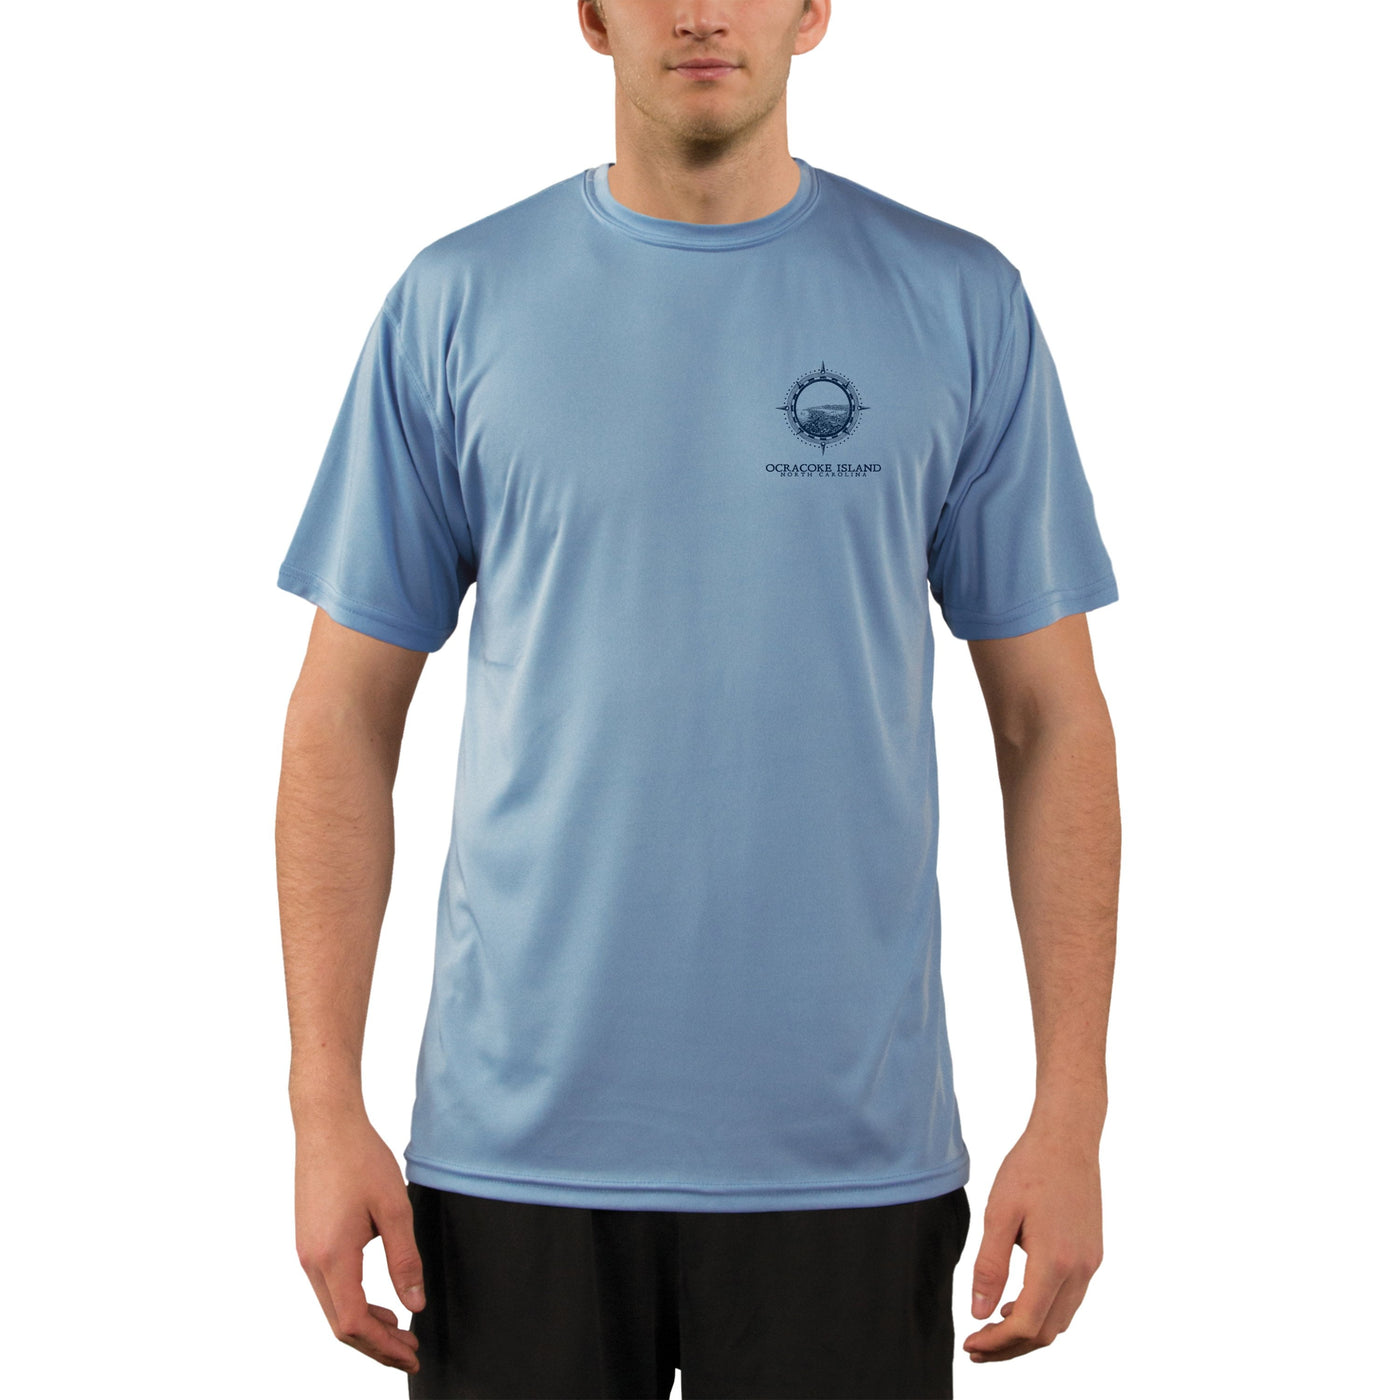 Compass Vintage Ocracoke Island Men's UPF 50+ Short Sleeve T-shirt